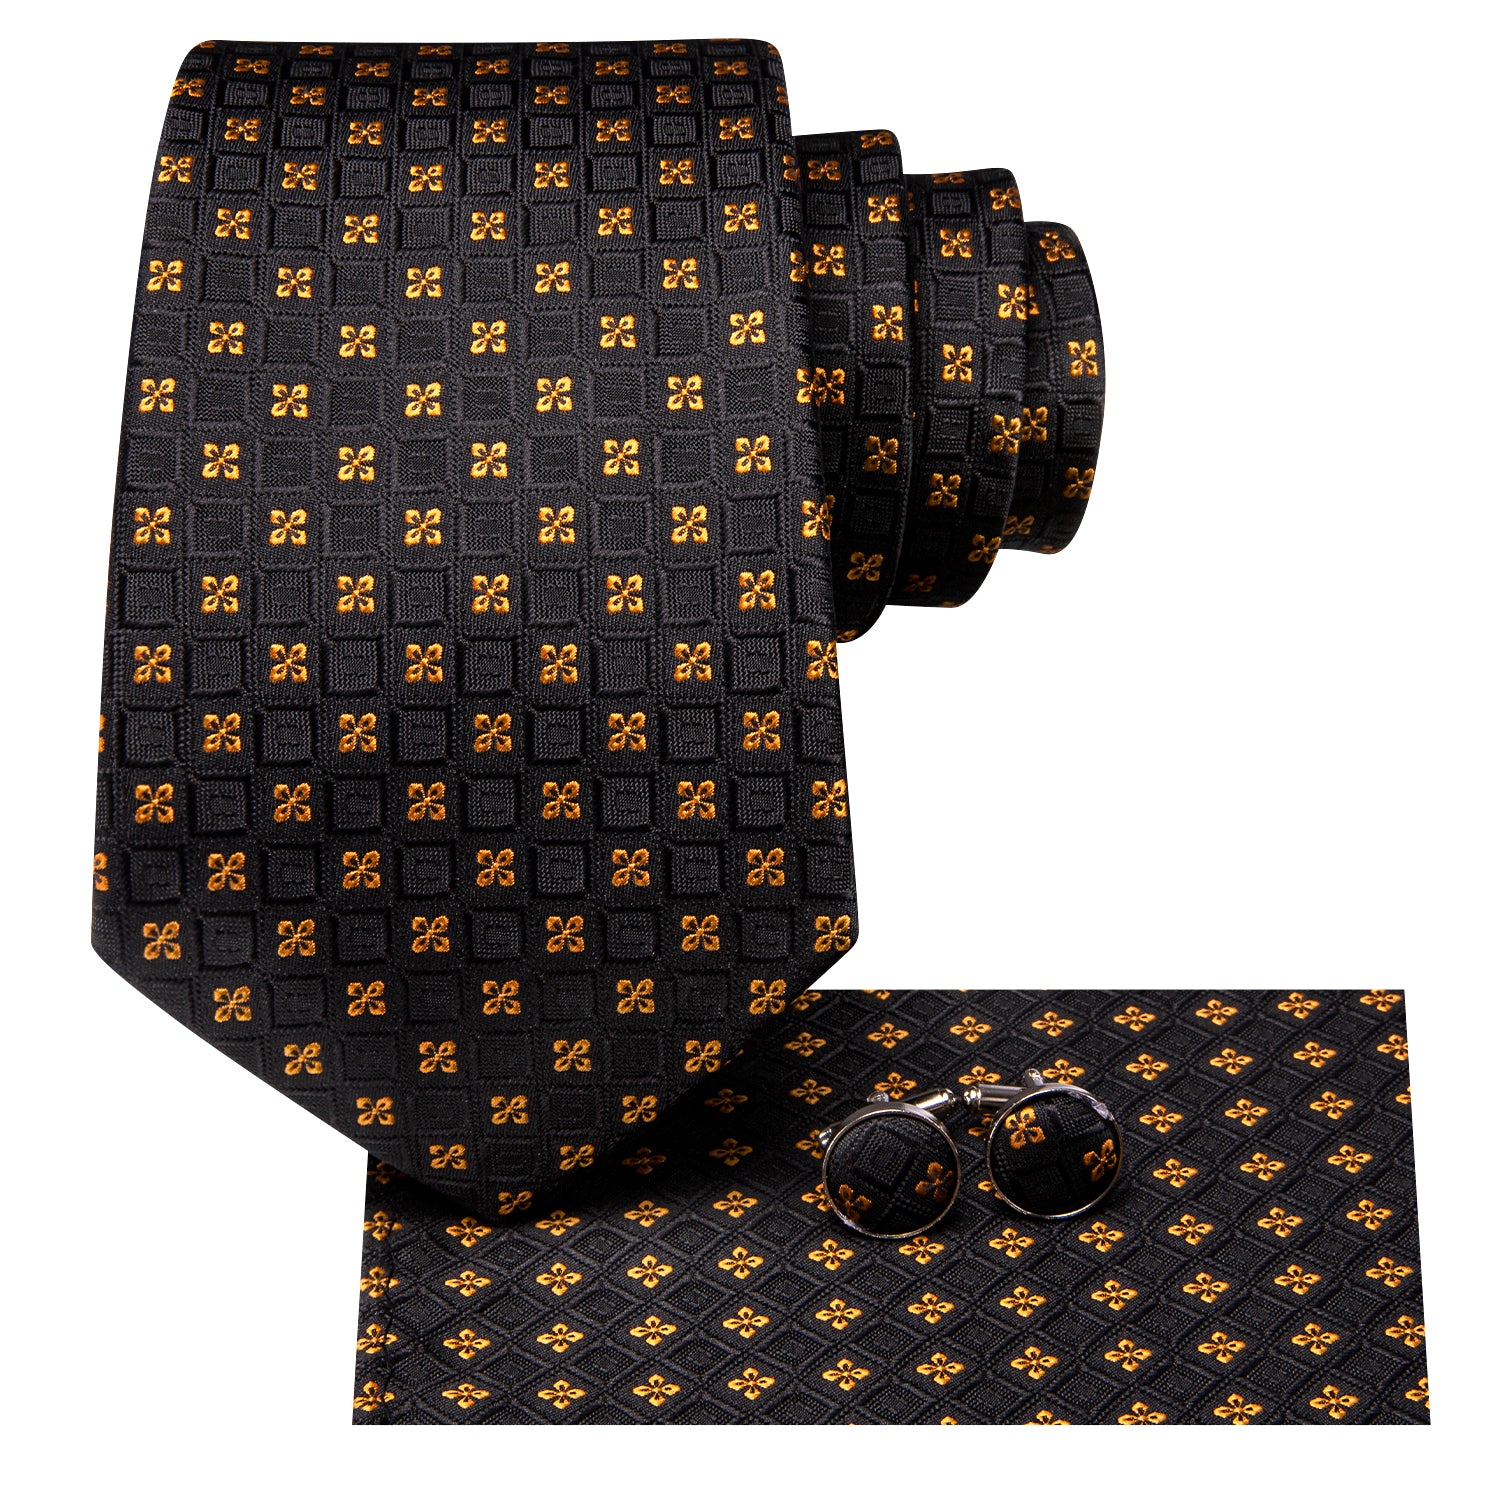 Hi-Tie Black Yellow Flower Men's Tie Pocket Square Cufflinks Set